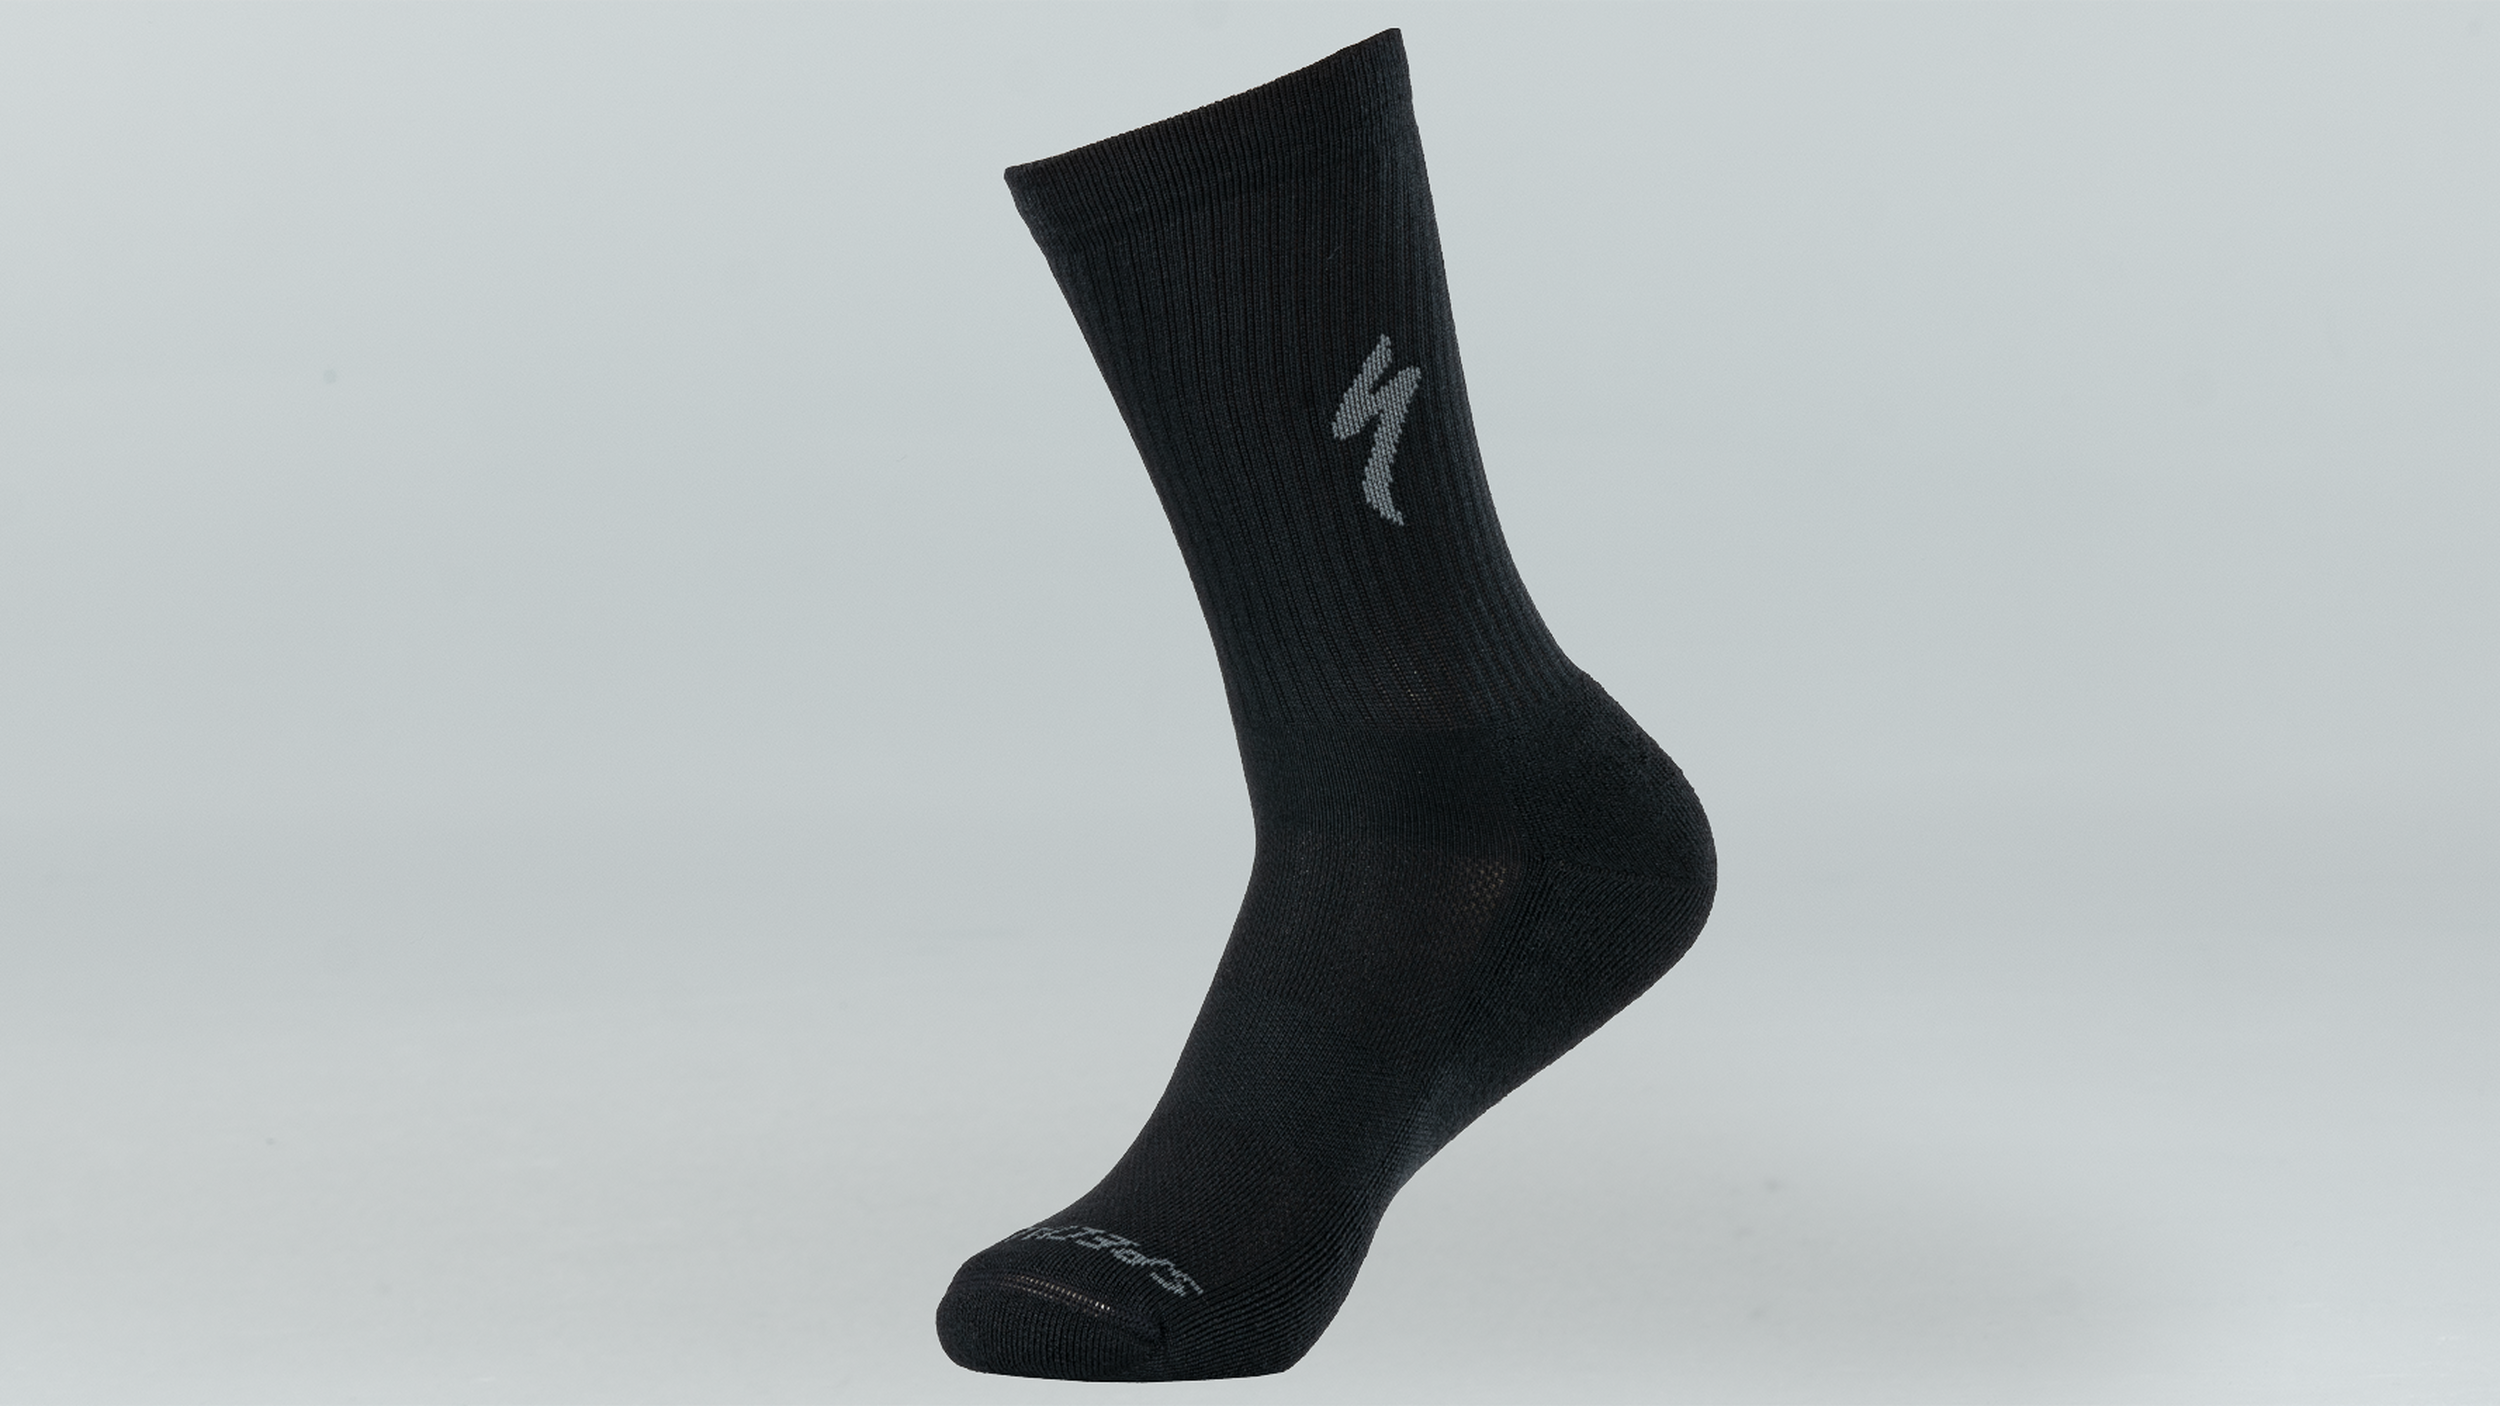 nep Sherlock Holmes Wrijven Techno MTB Tall sokken | Specialized.com